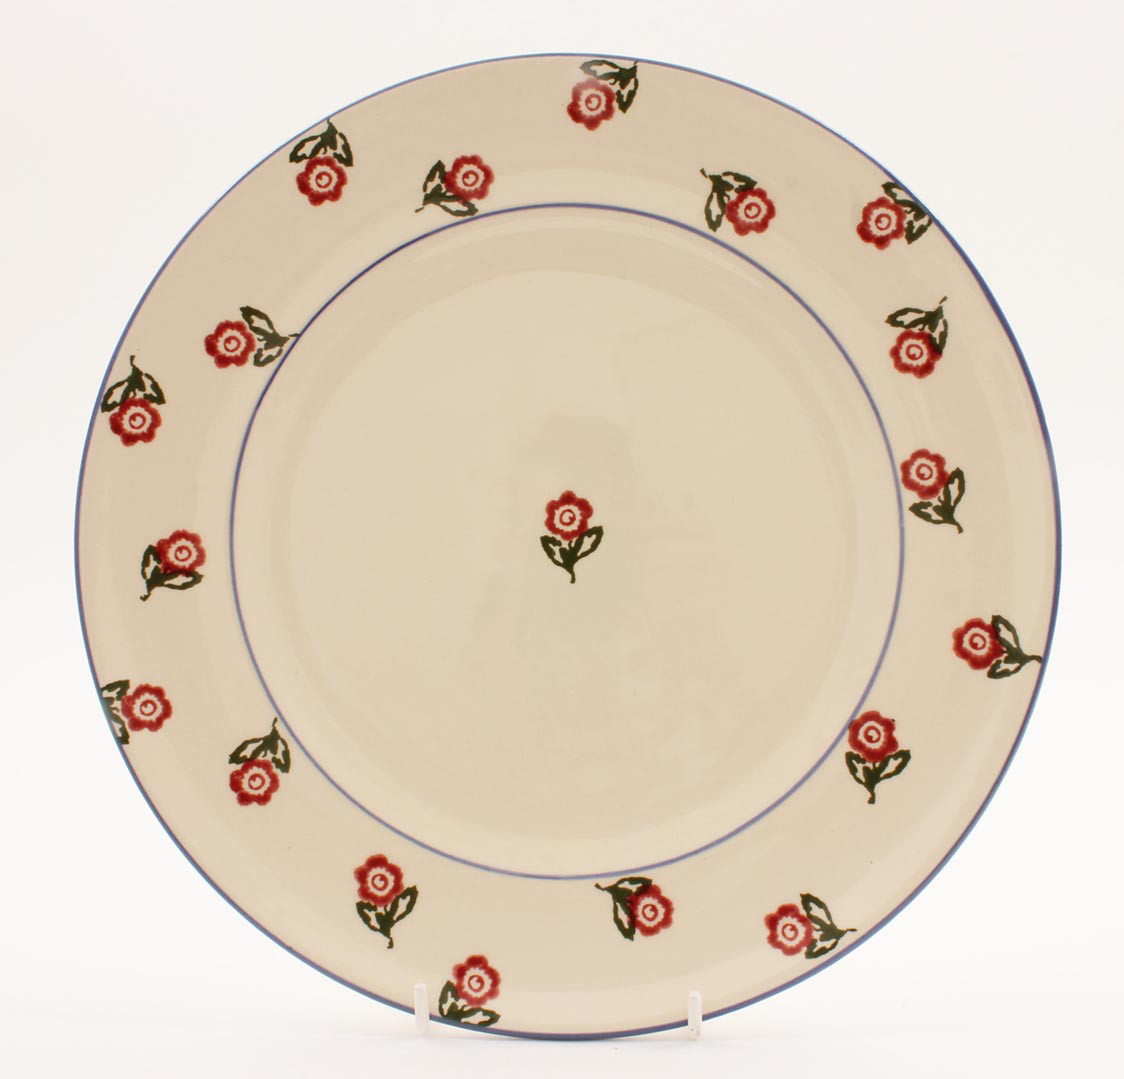 Brixton Scattered Rose Dinner Plate 25cm Gift